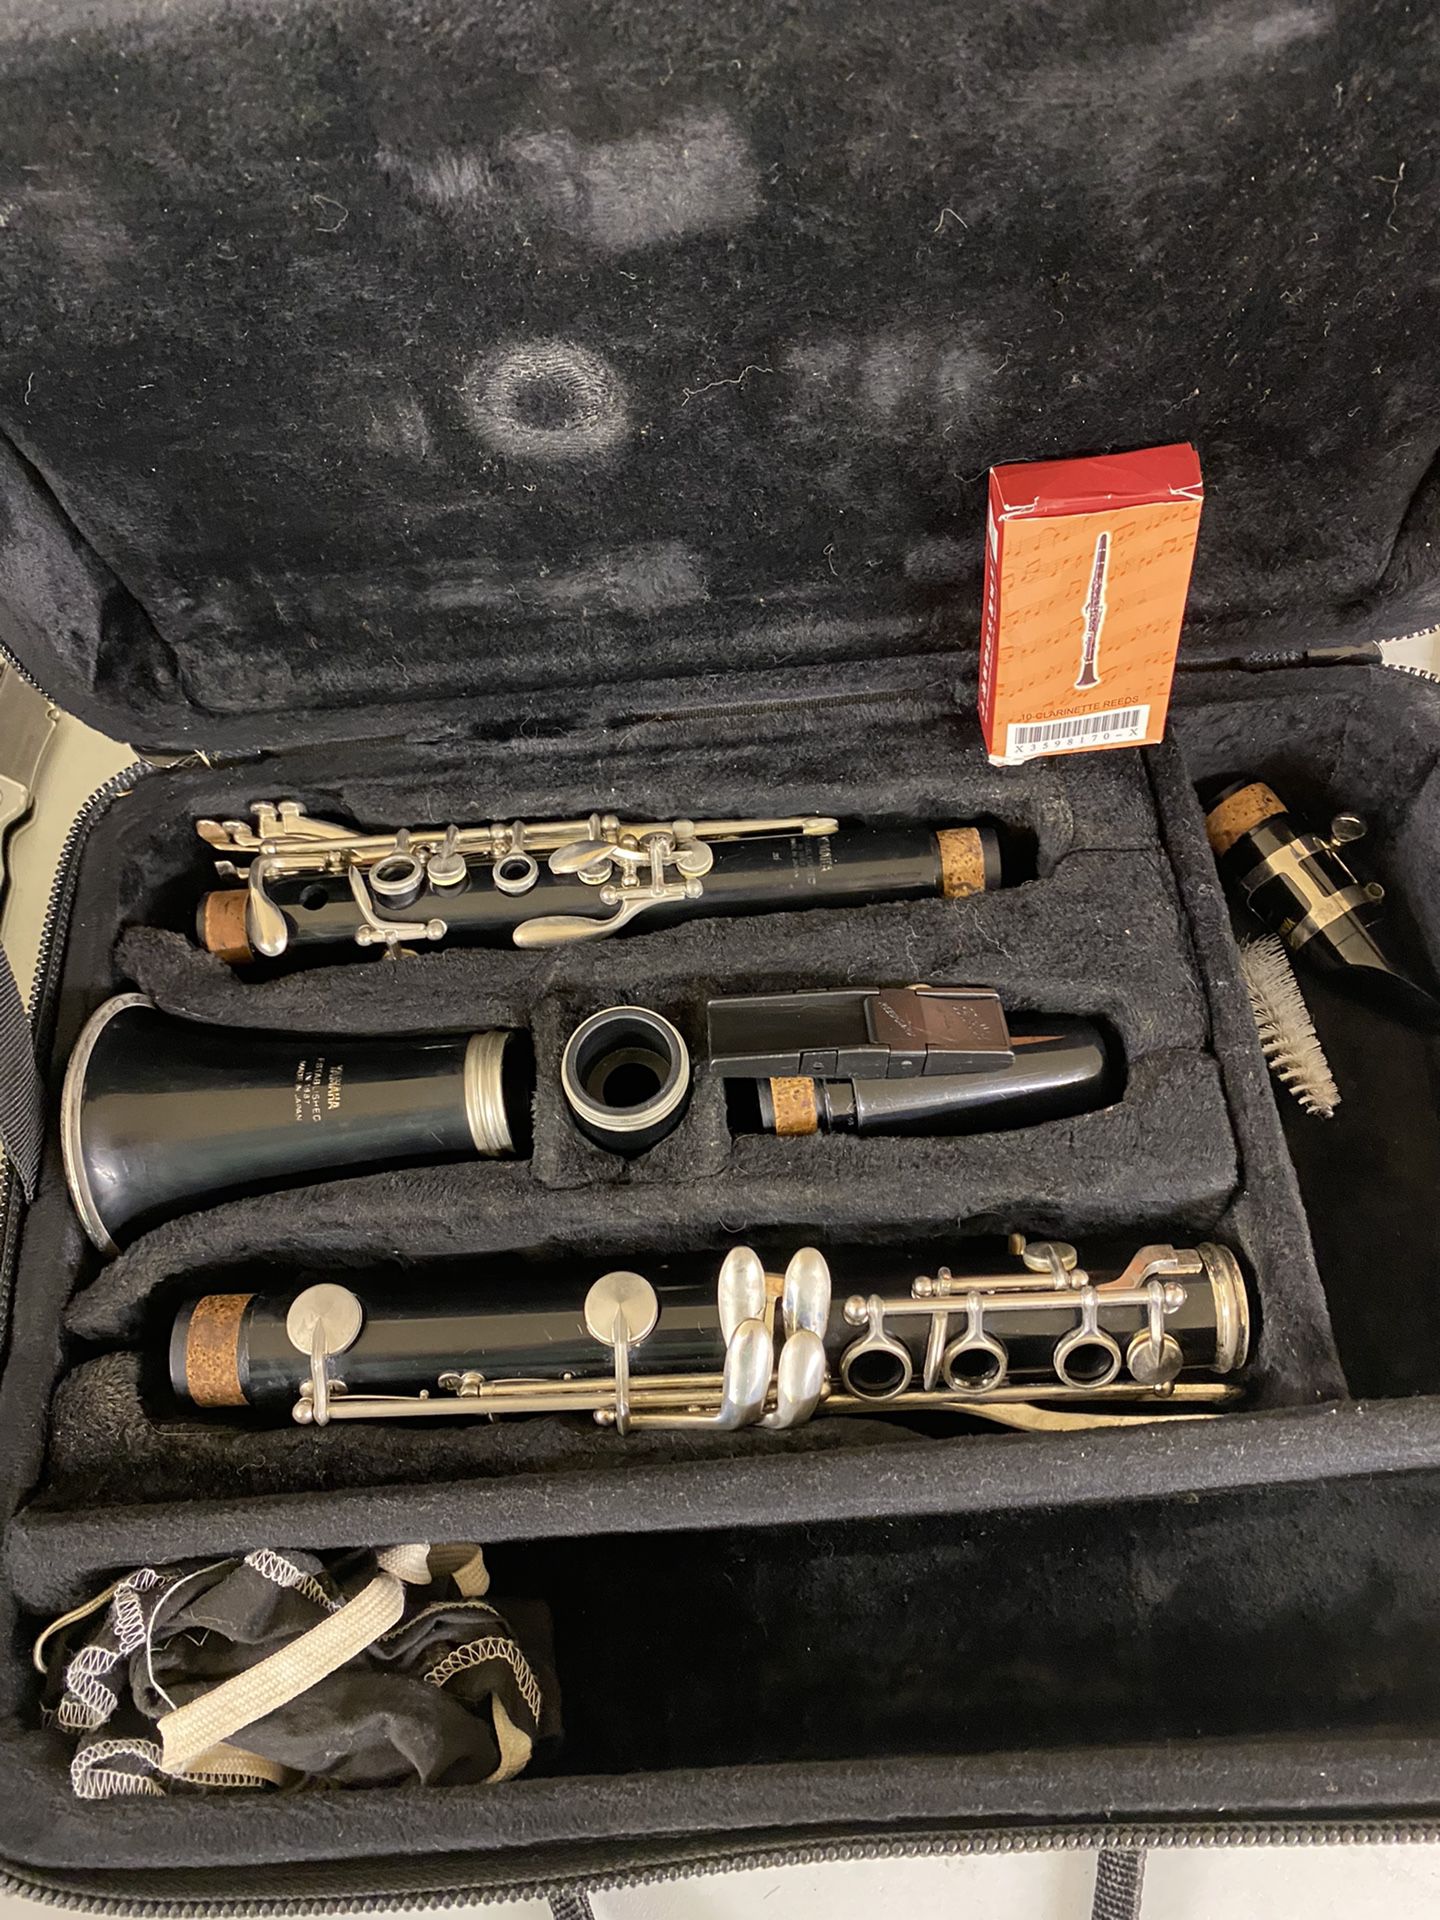 Waco Yamaha Clarinet With New Box Of Reeds $400 Firm